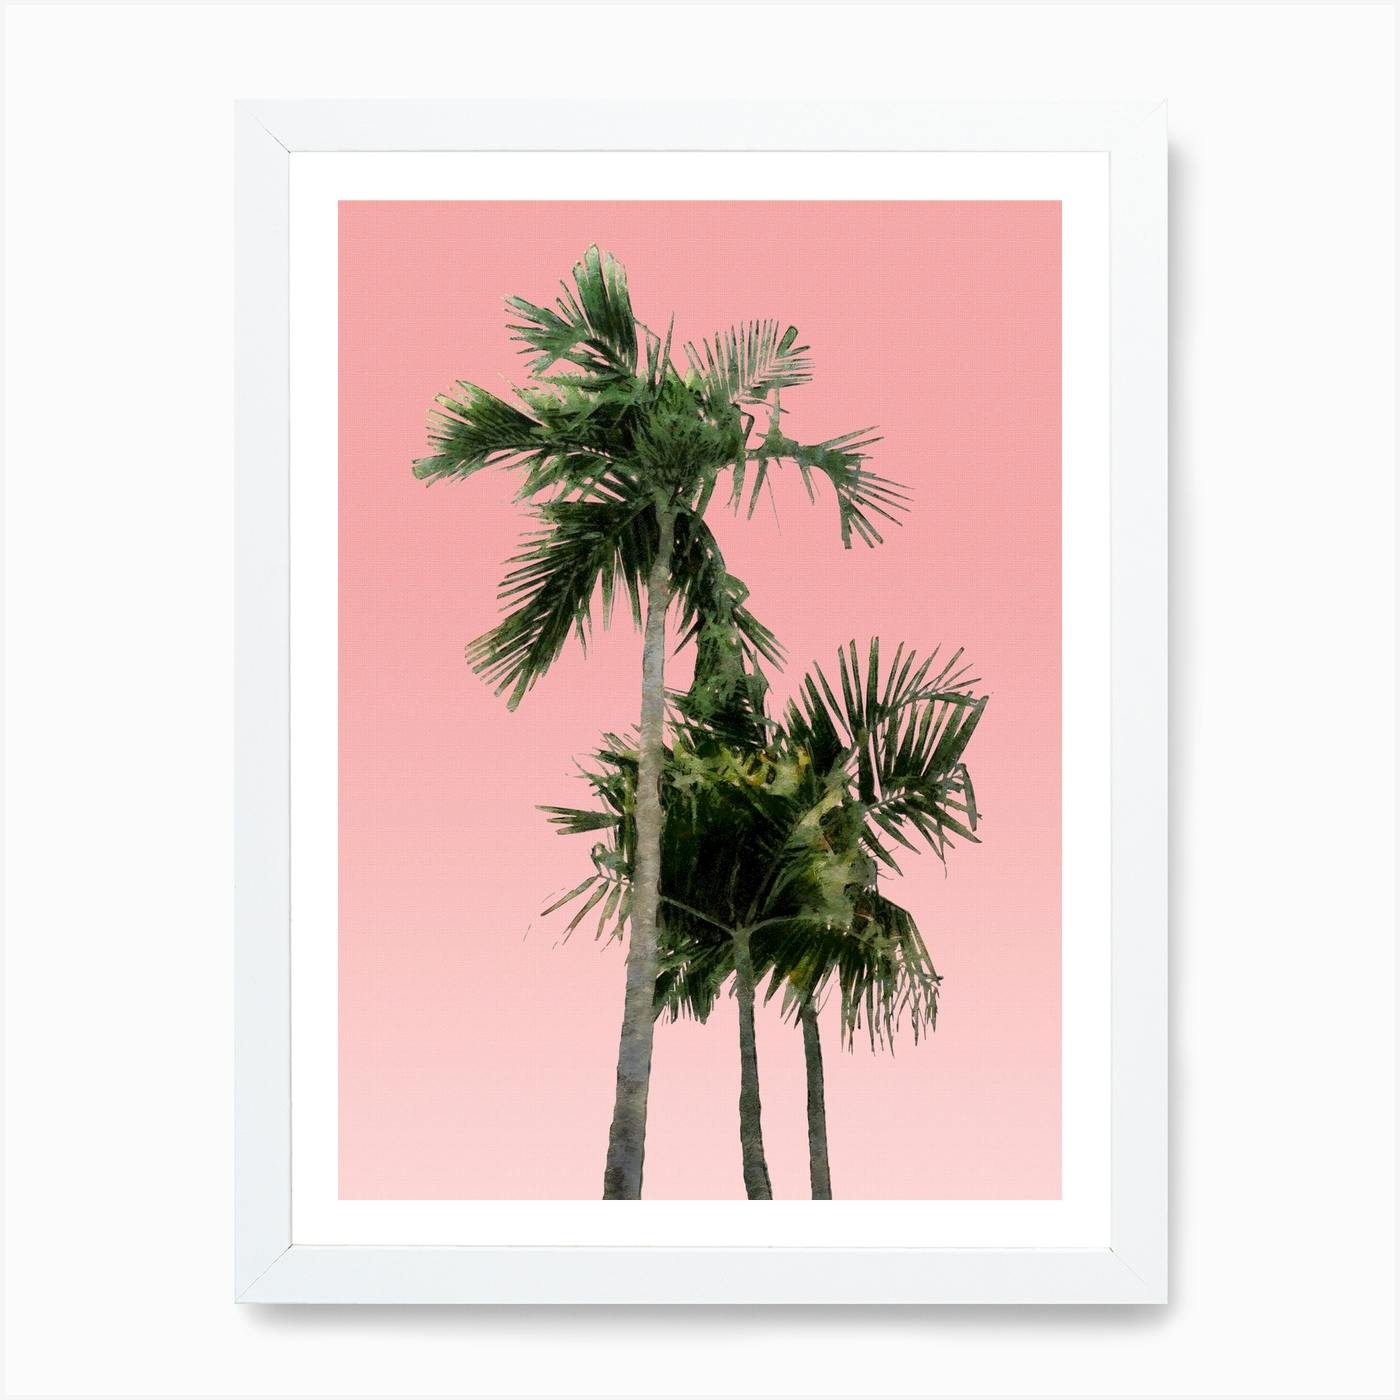 CANVAS WALL ART PRINT ARTWORK 30MM DEEP FRAME  Pink Black and white Palm Tree 